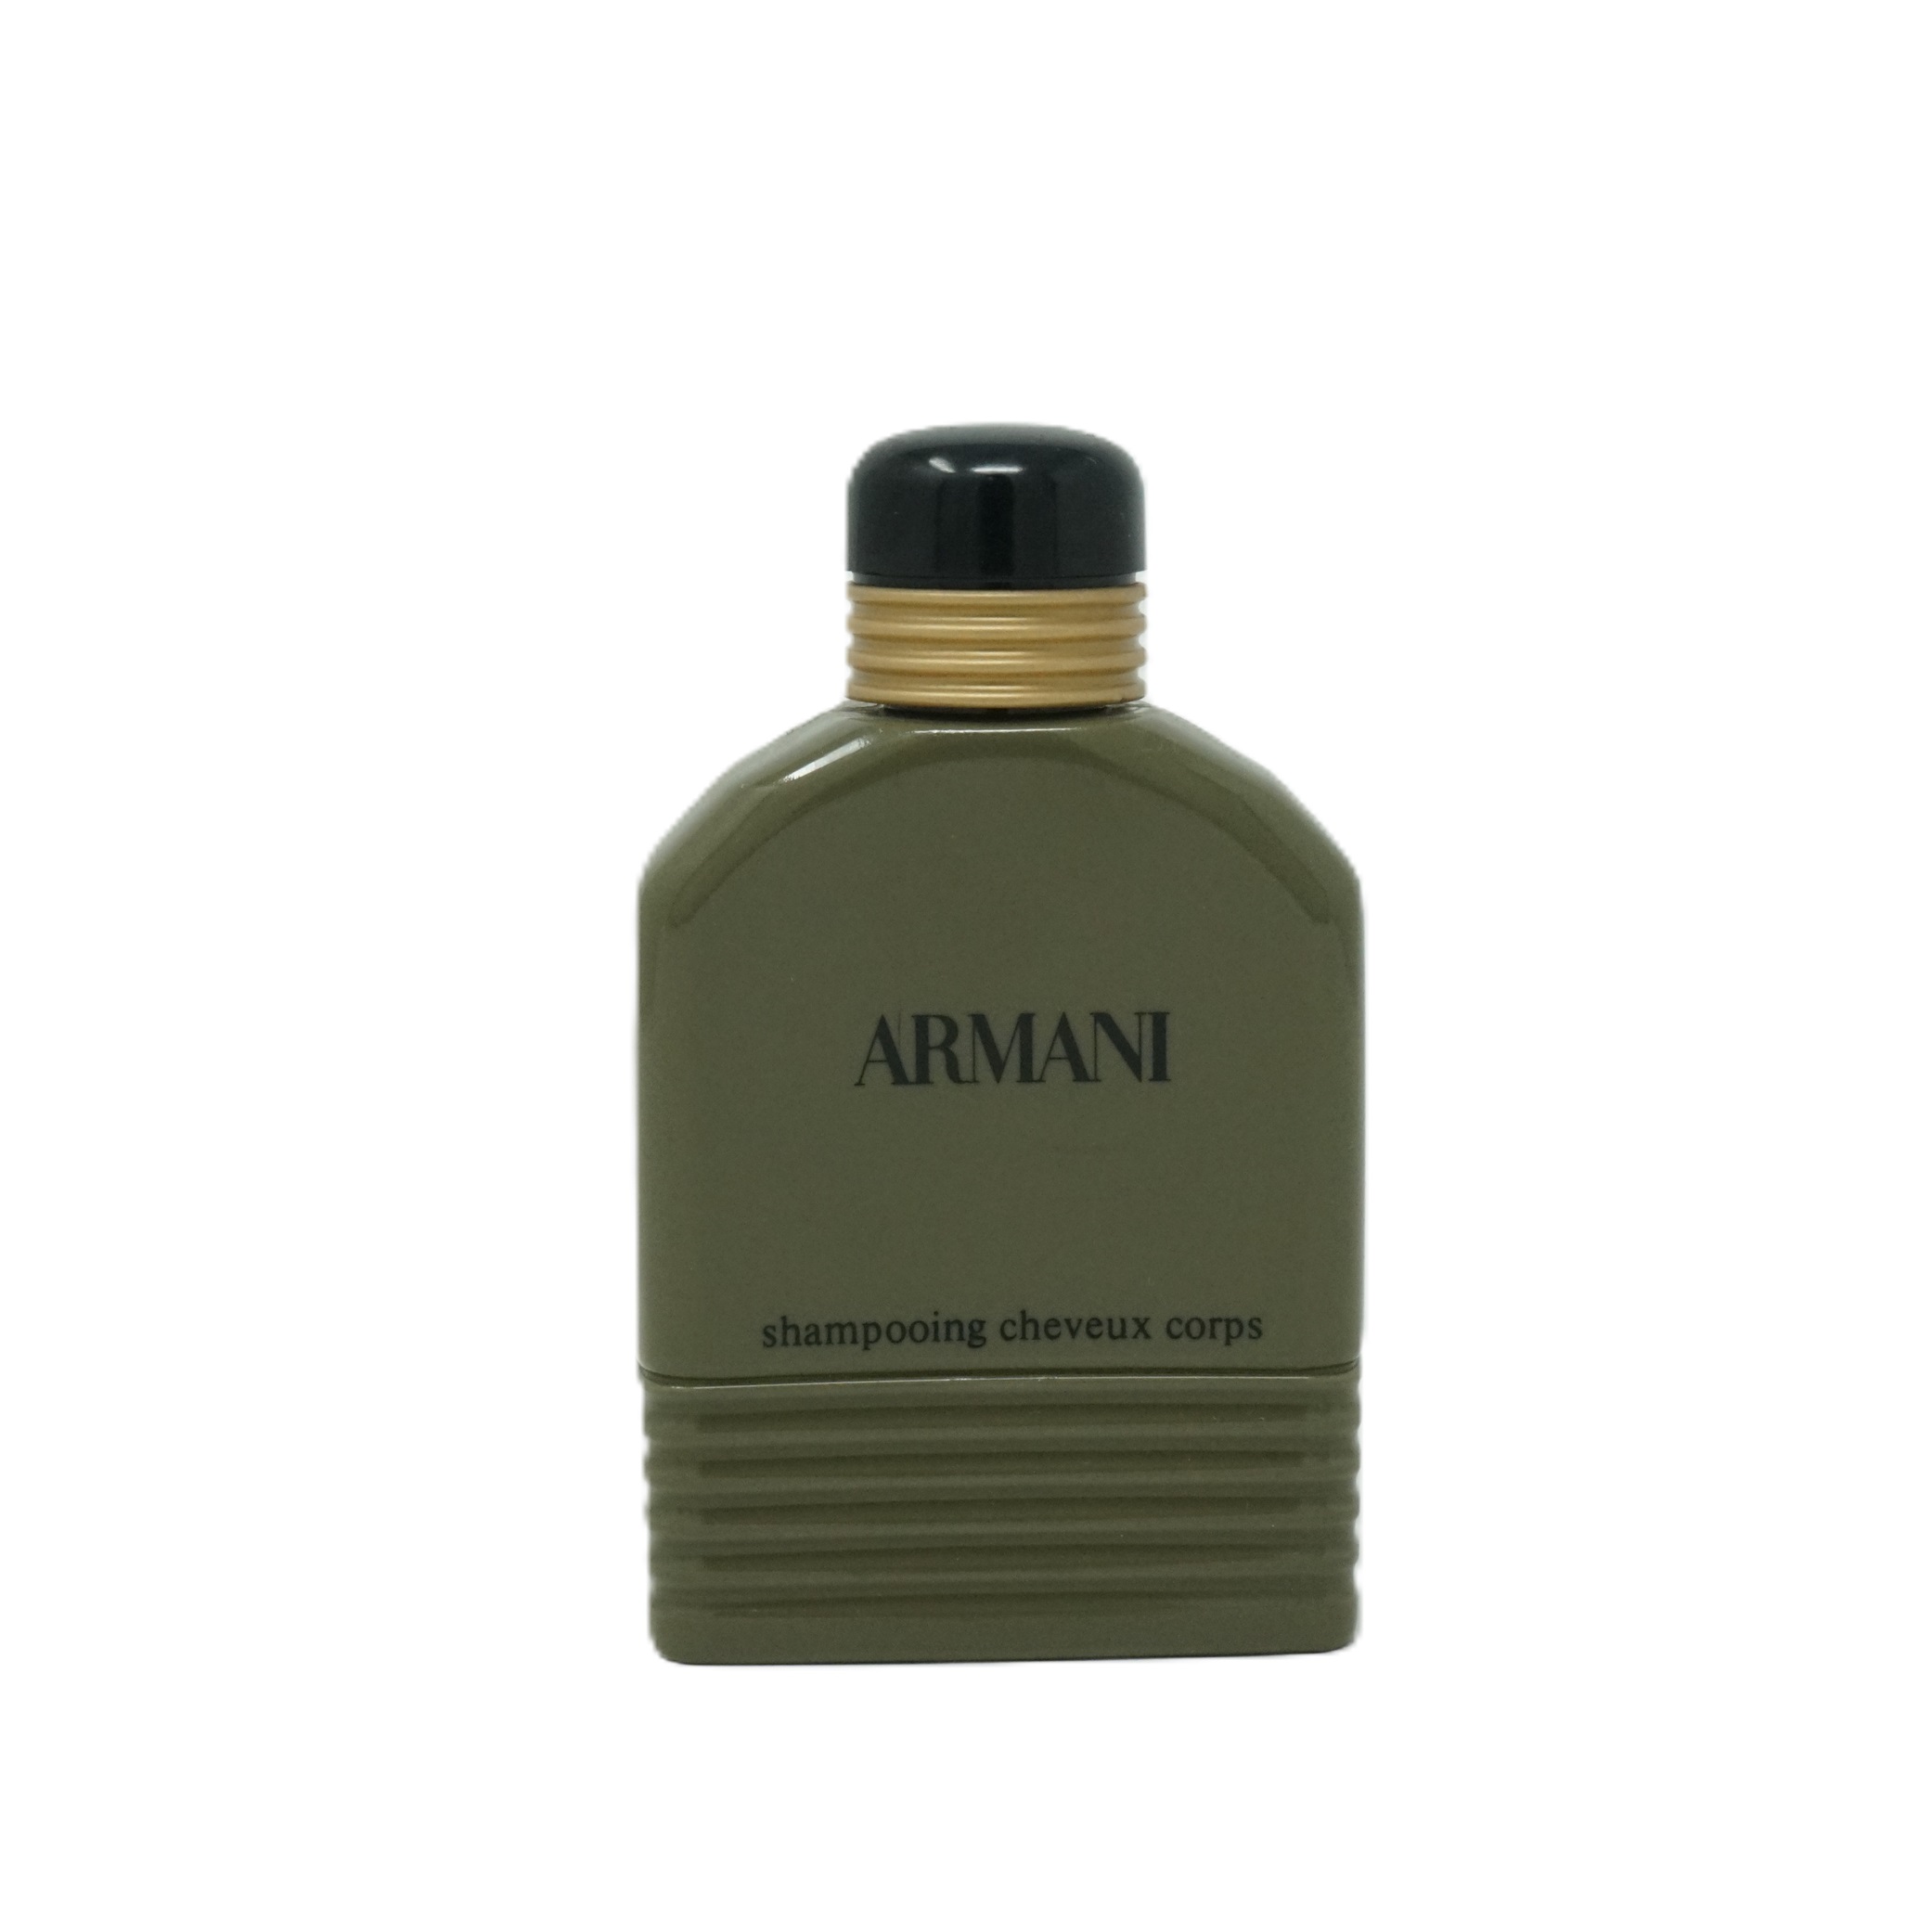 Armani Homme Body and Hair Shampoo 200ml